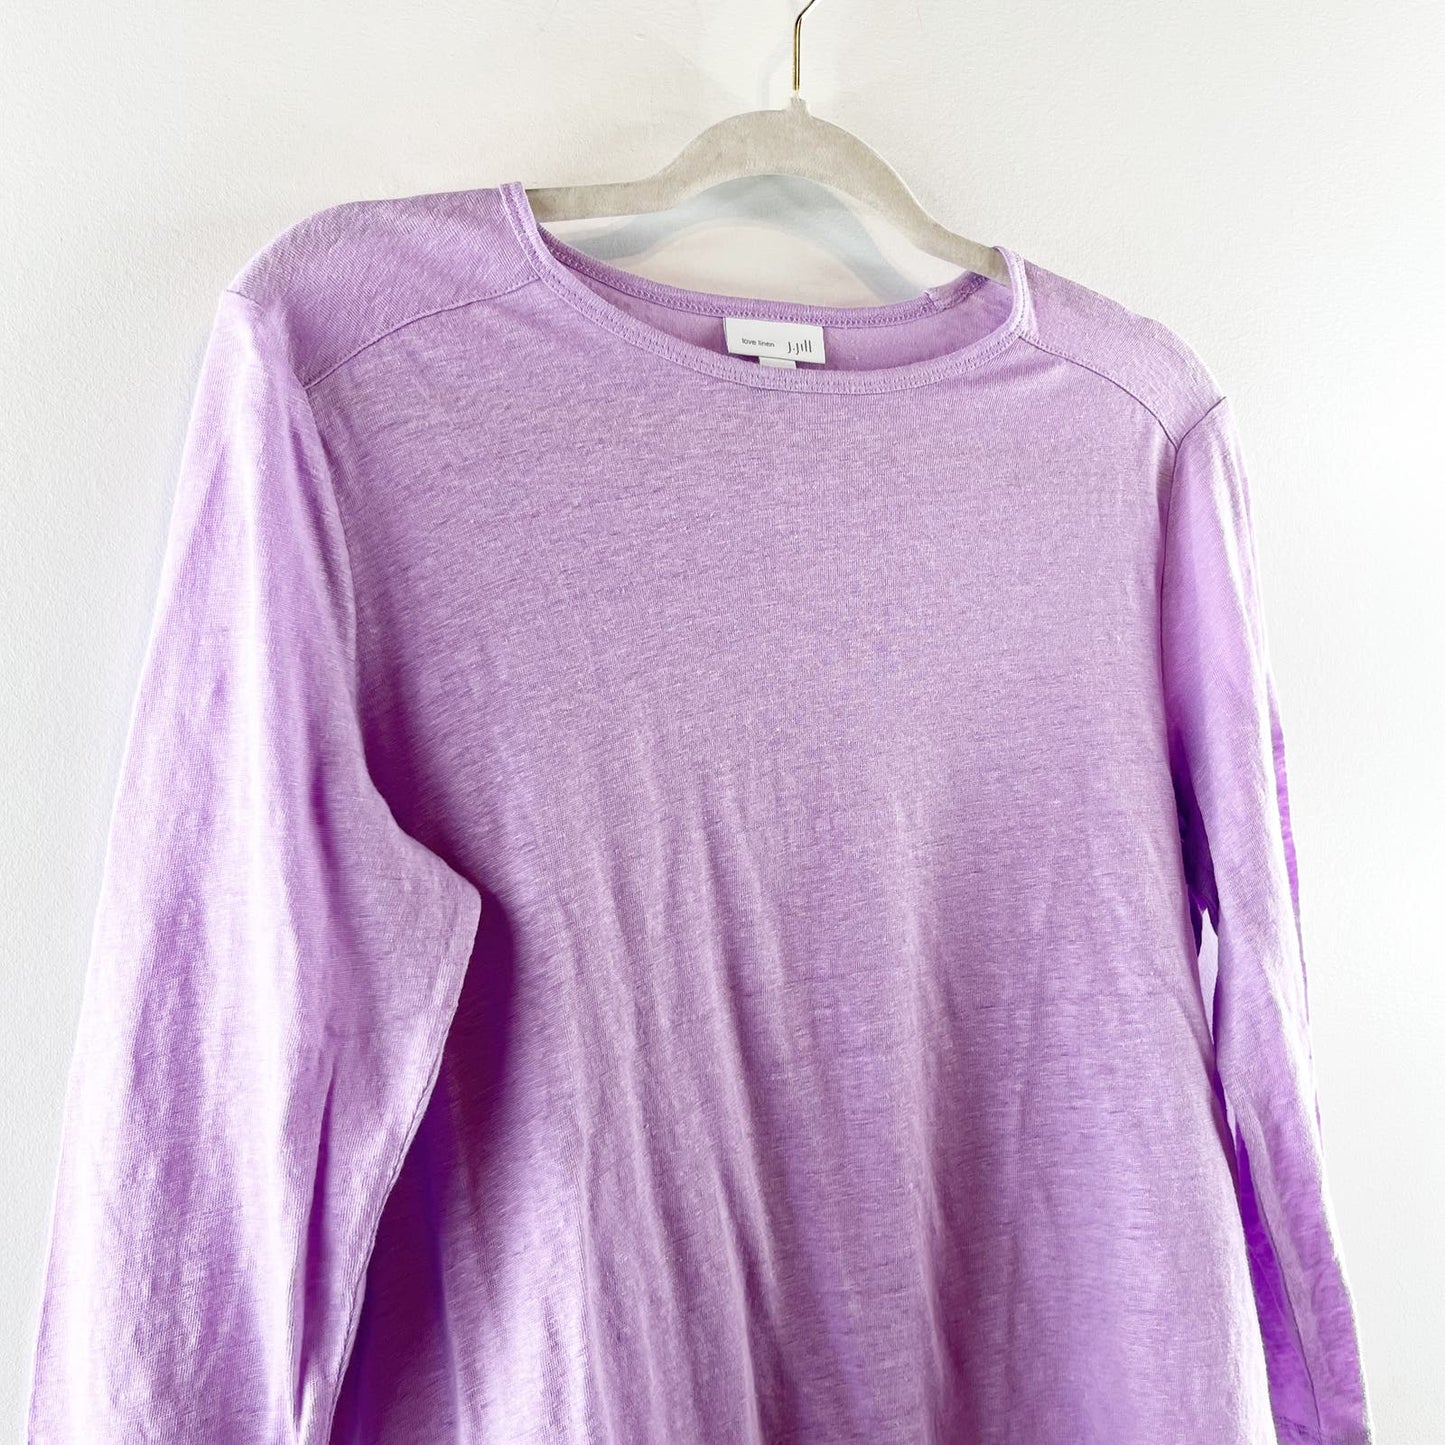 J. Jill Love Linen 100% Linen Layered Sweater Top Blouse Lavender Purple Small